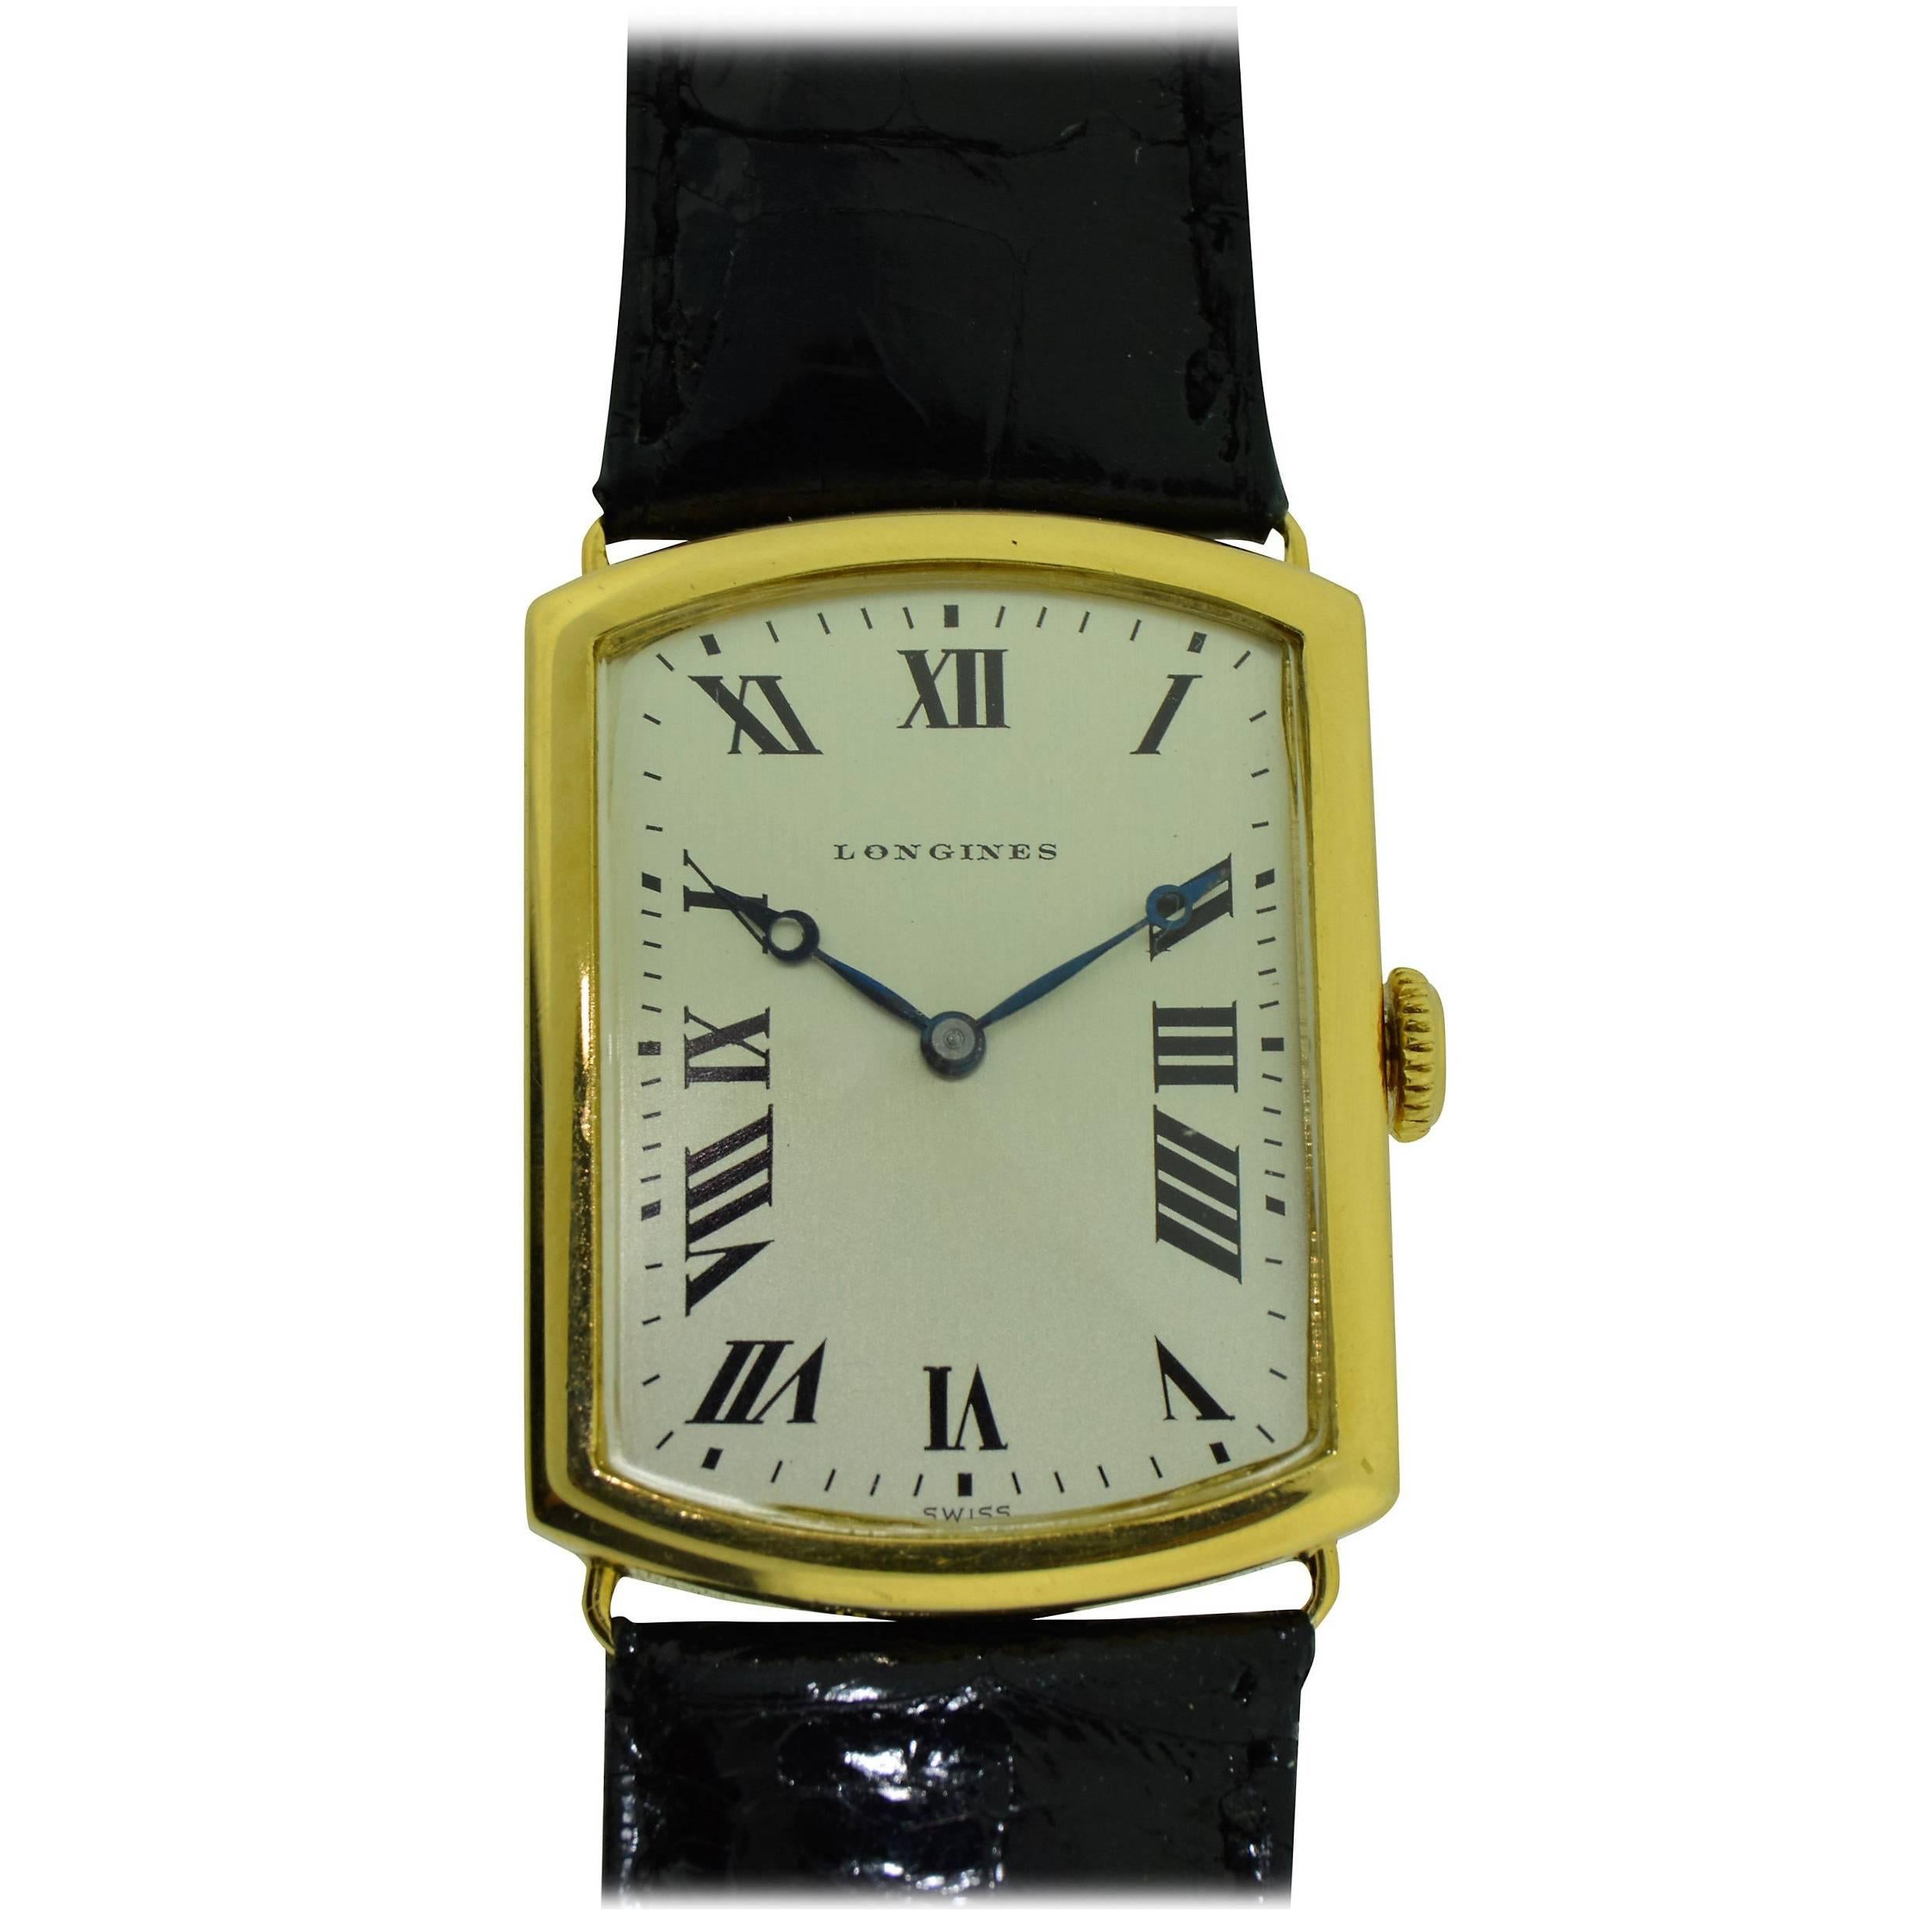 Longines 18Kt. Yellow Gold Men's Wrist Watch, French Hallmarked